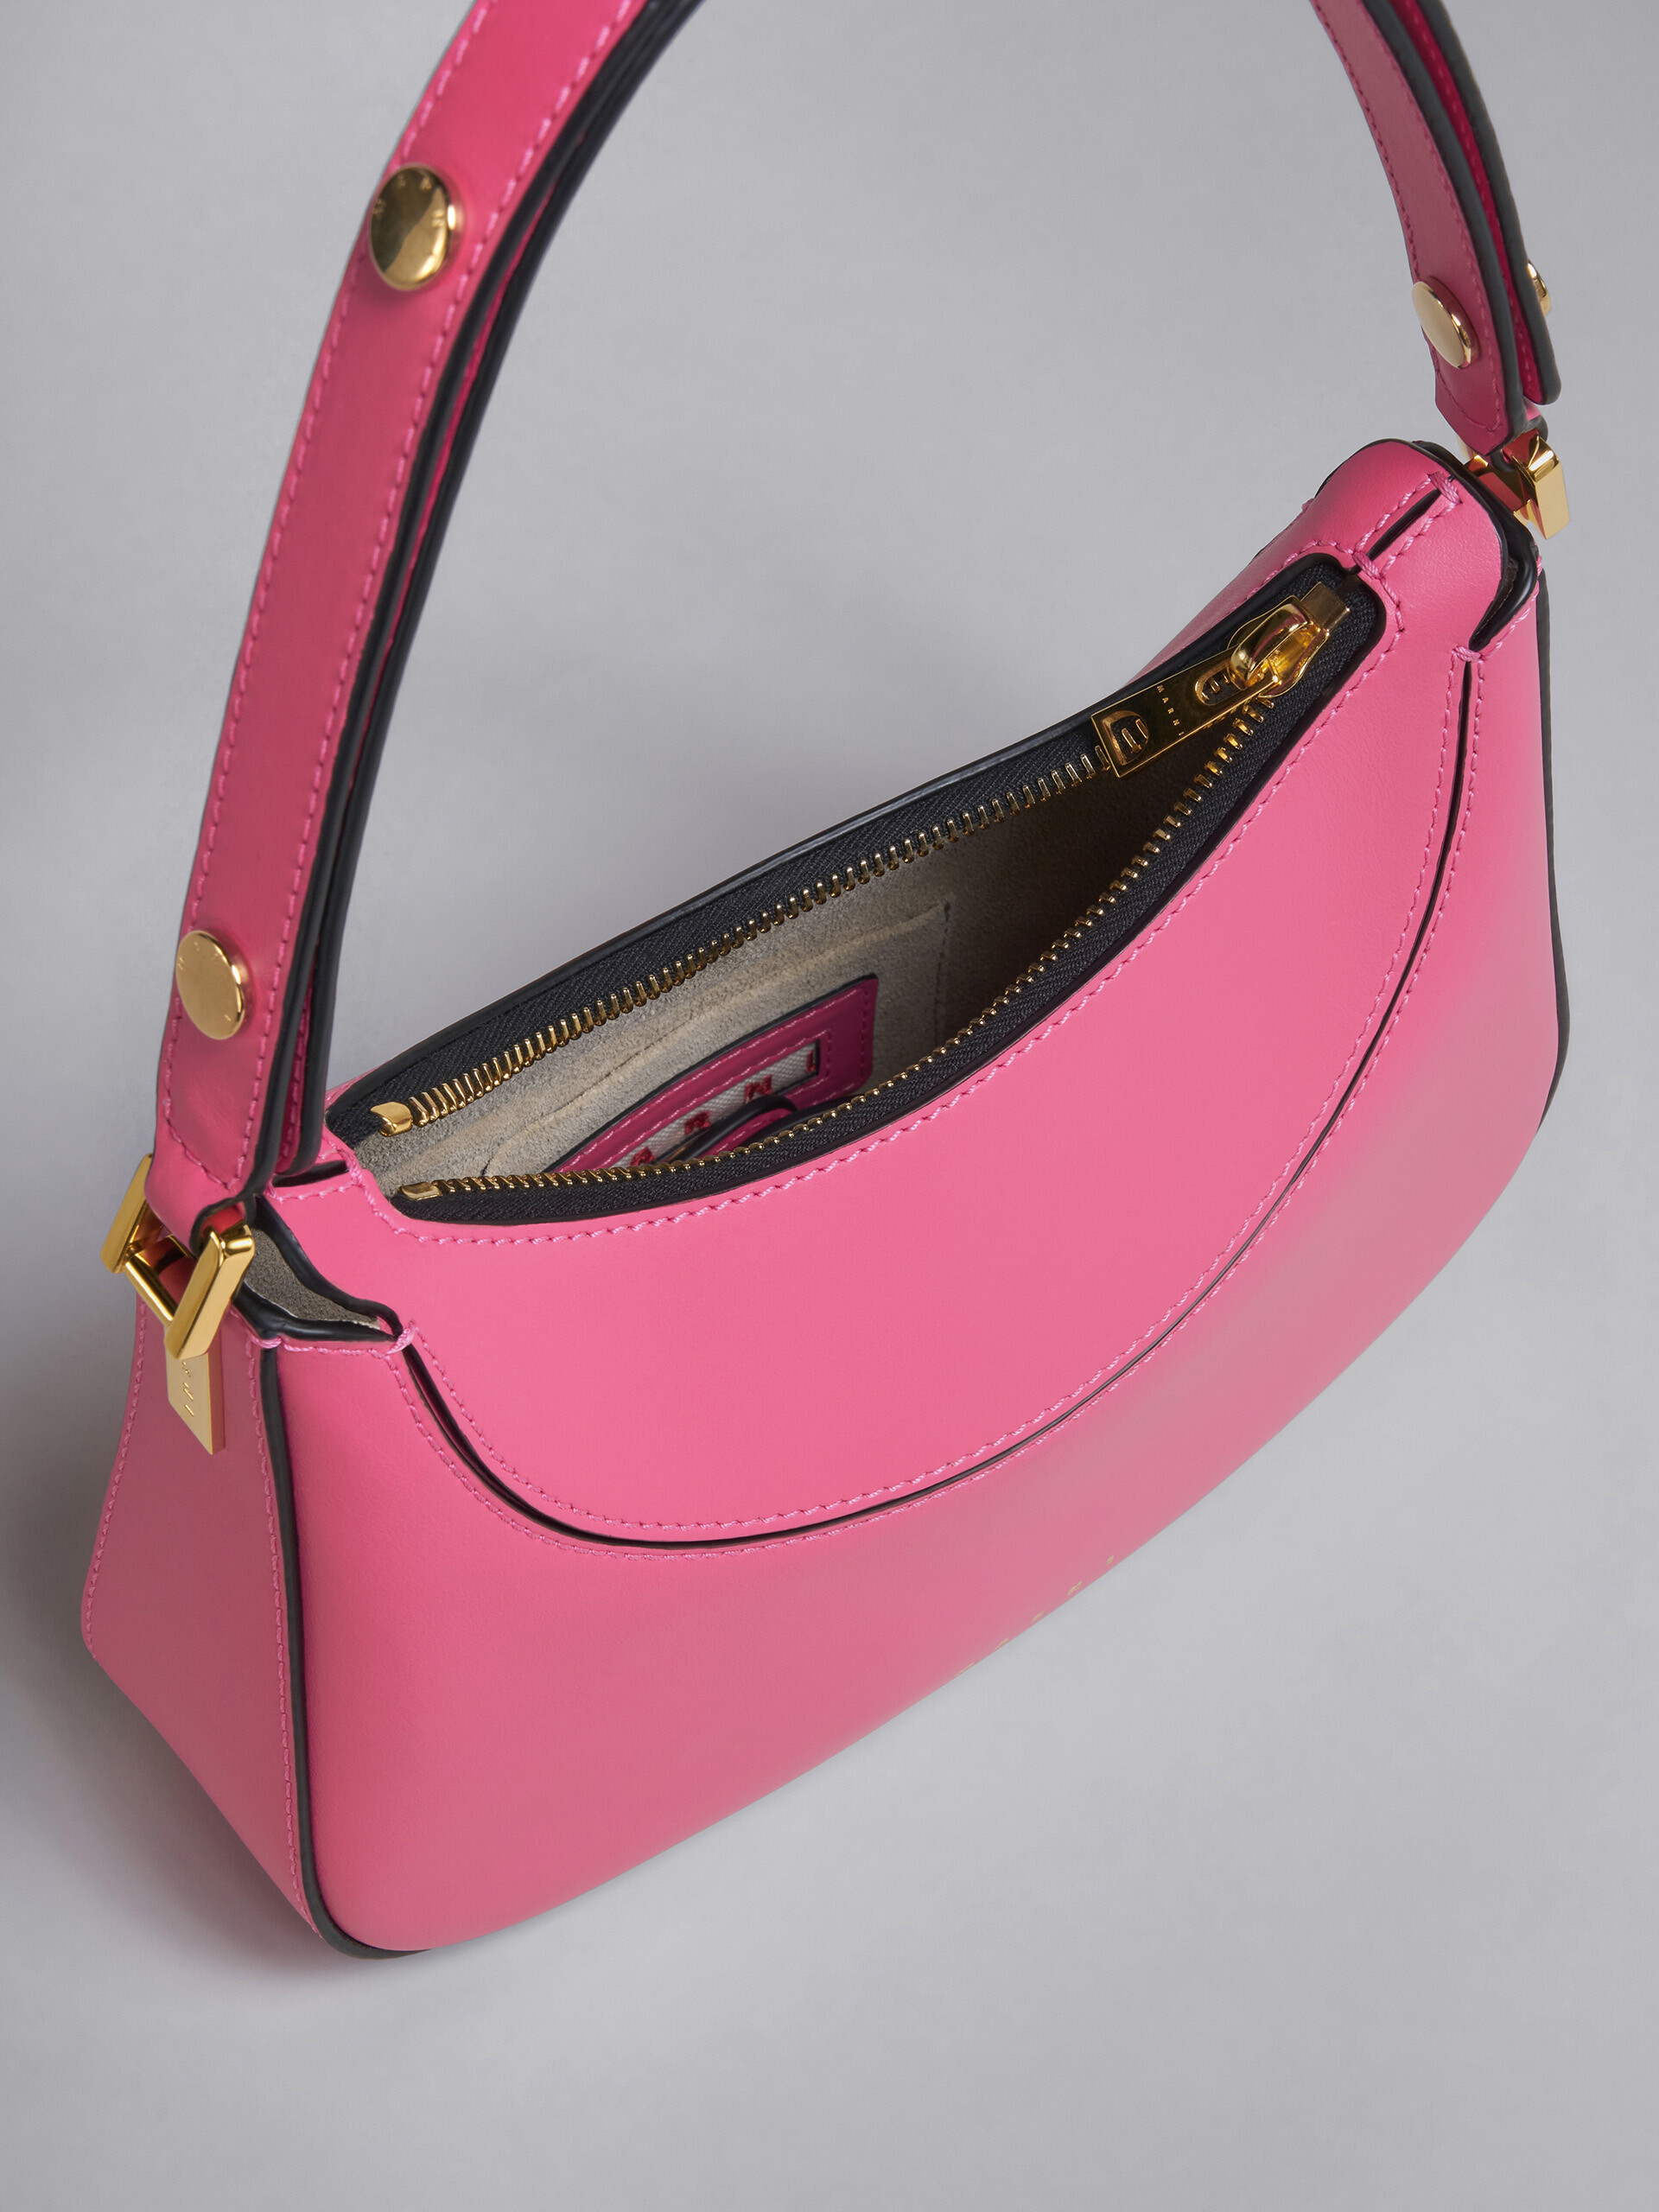 Milano mini bag in pink leather - Handbag - Image 4